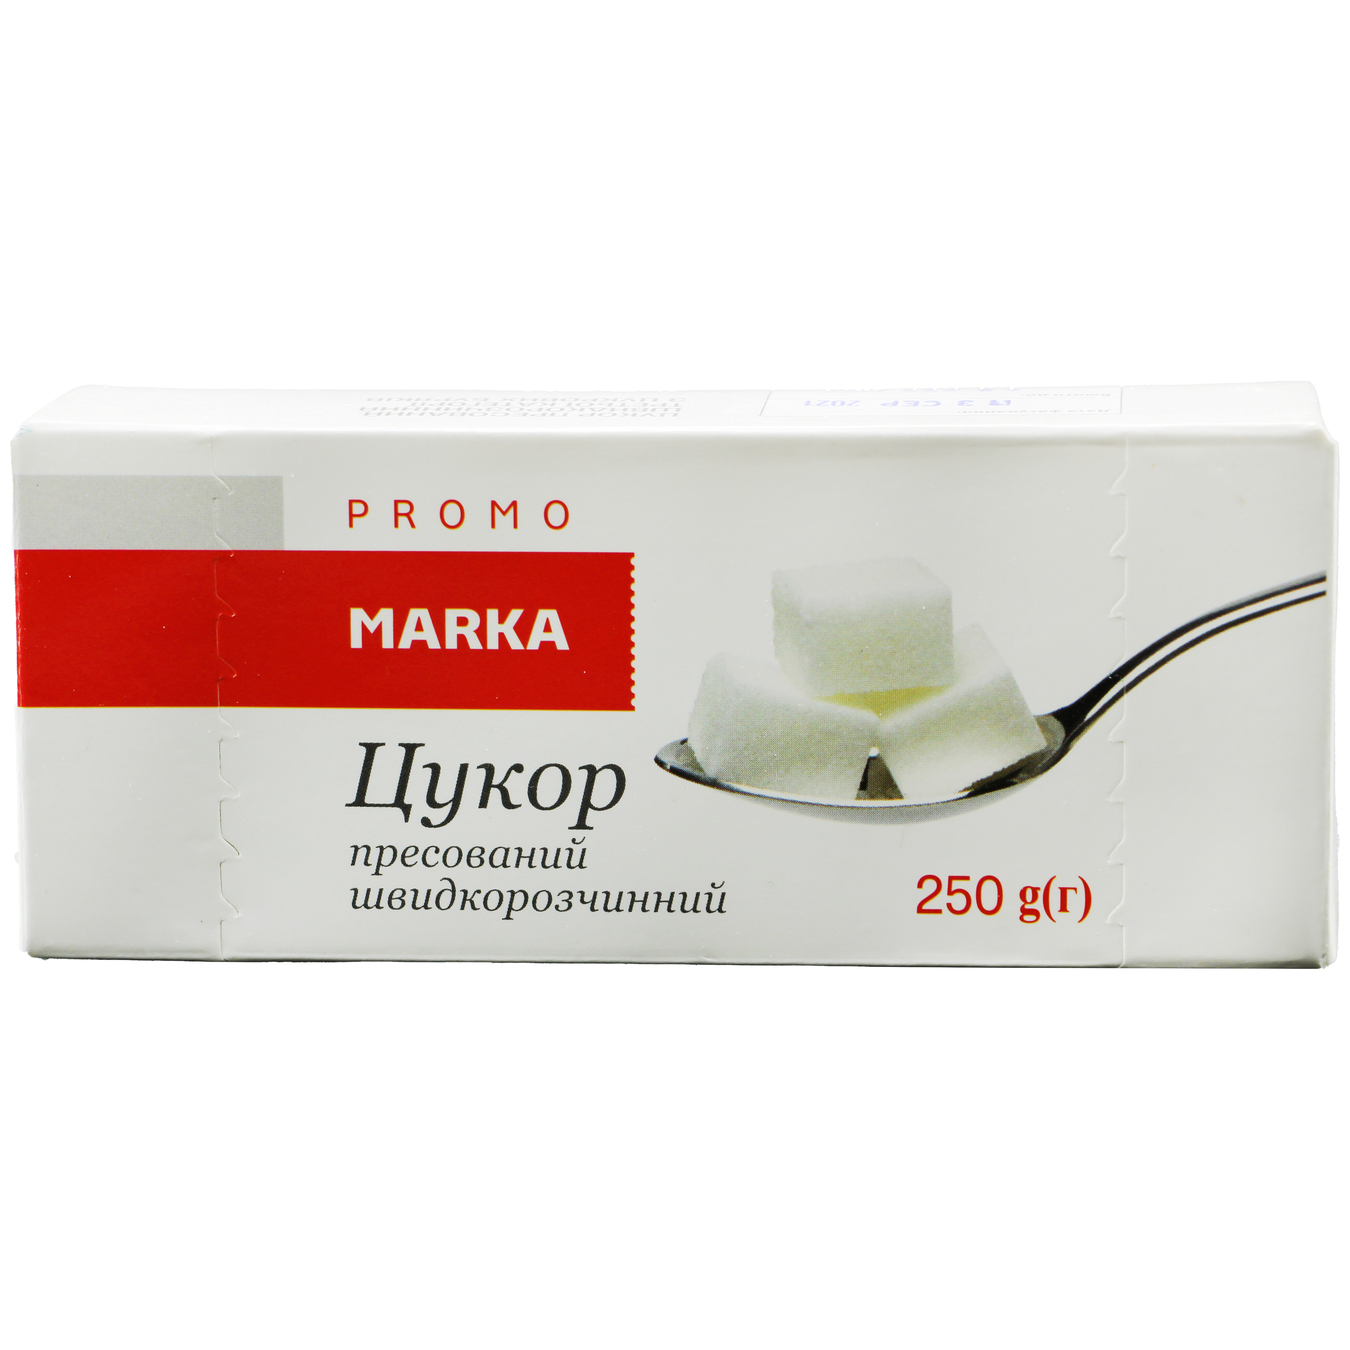 Marka Promo Pressed Instant Sugar 250g